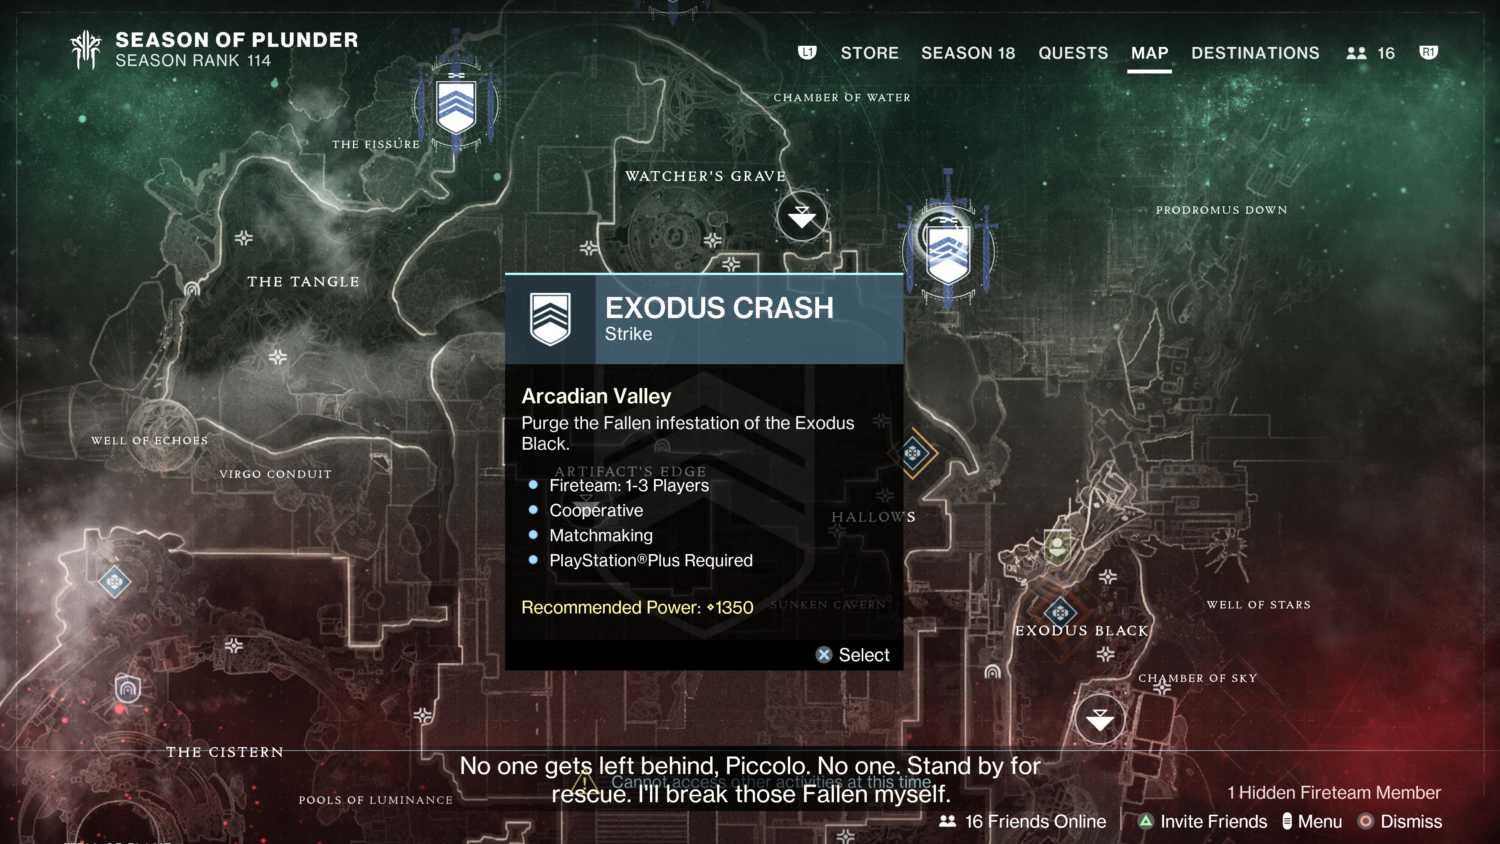 exodus crash strike location